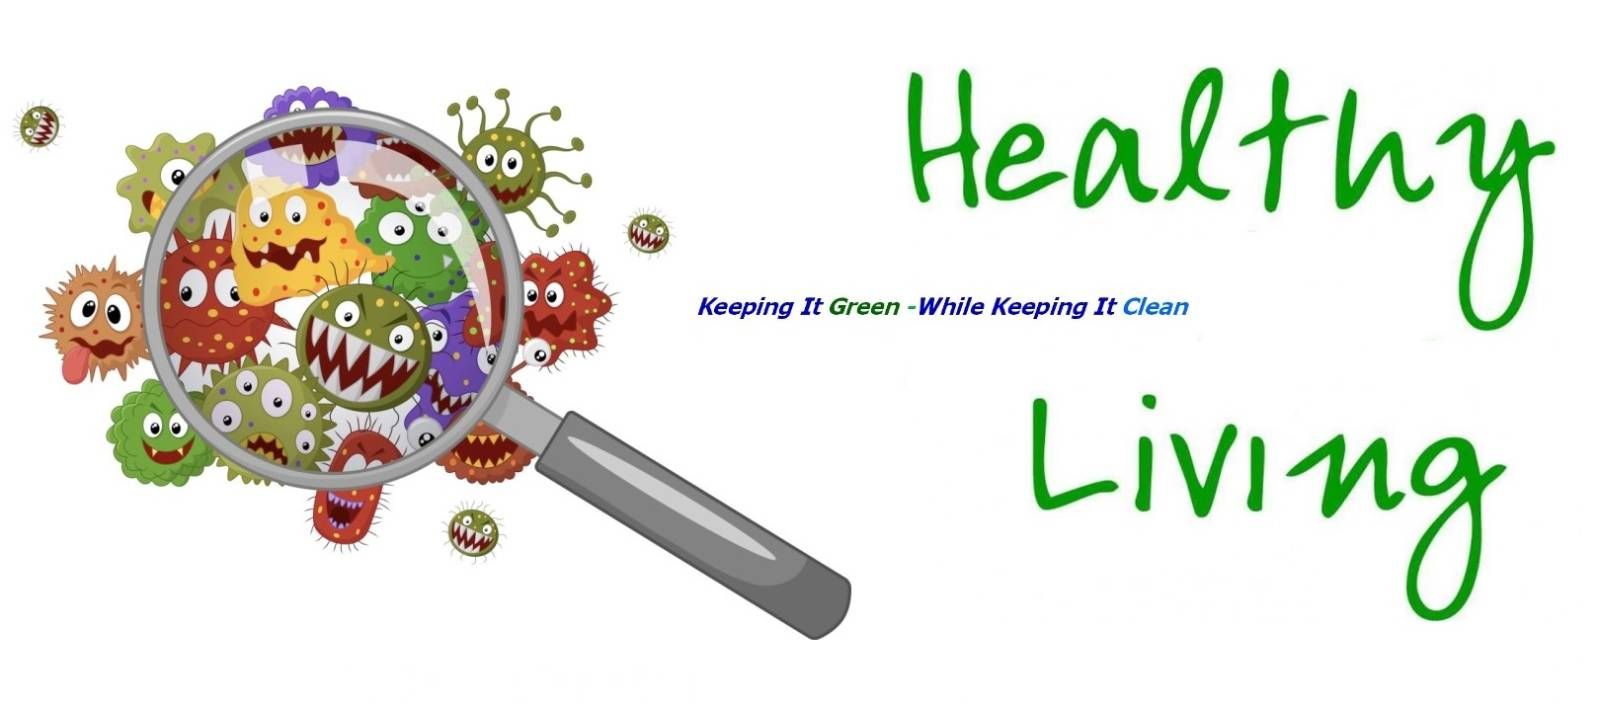 images easyblog articles 6542 1 living healthy Green It Clean 1 b4c92c63